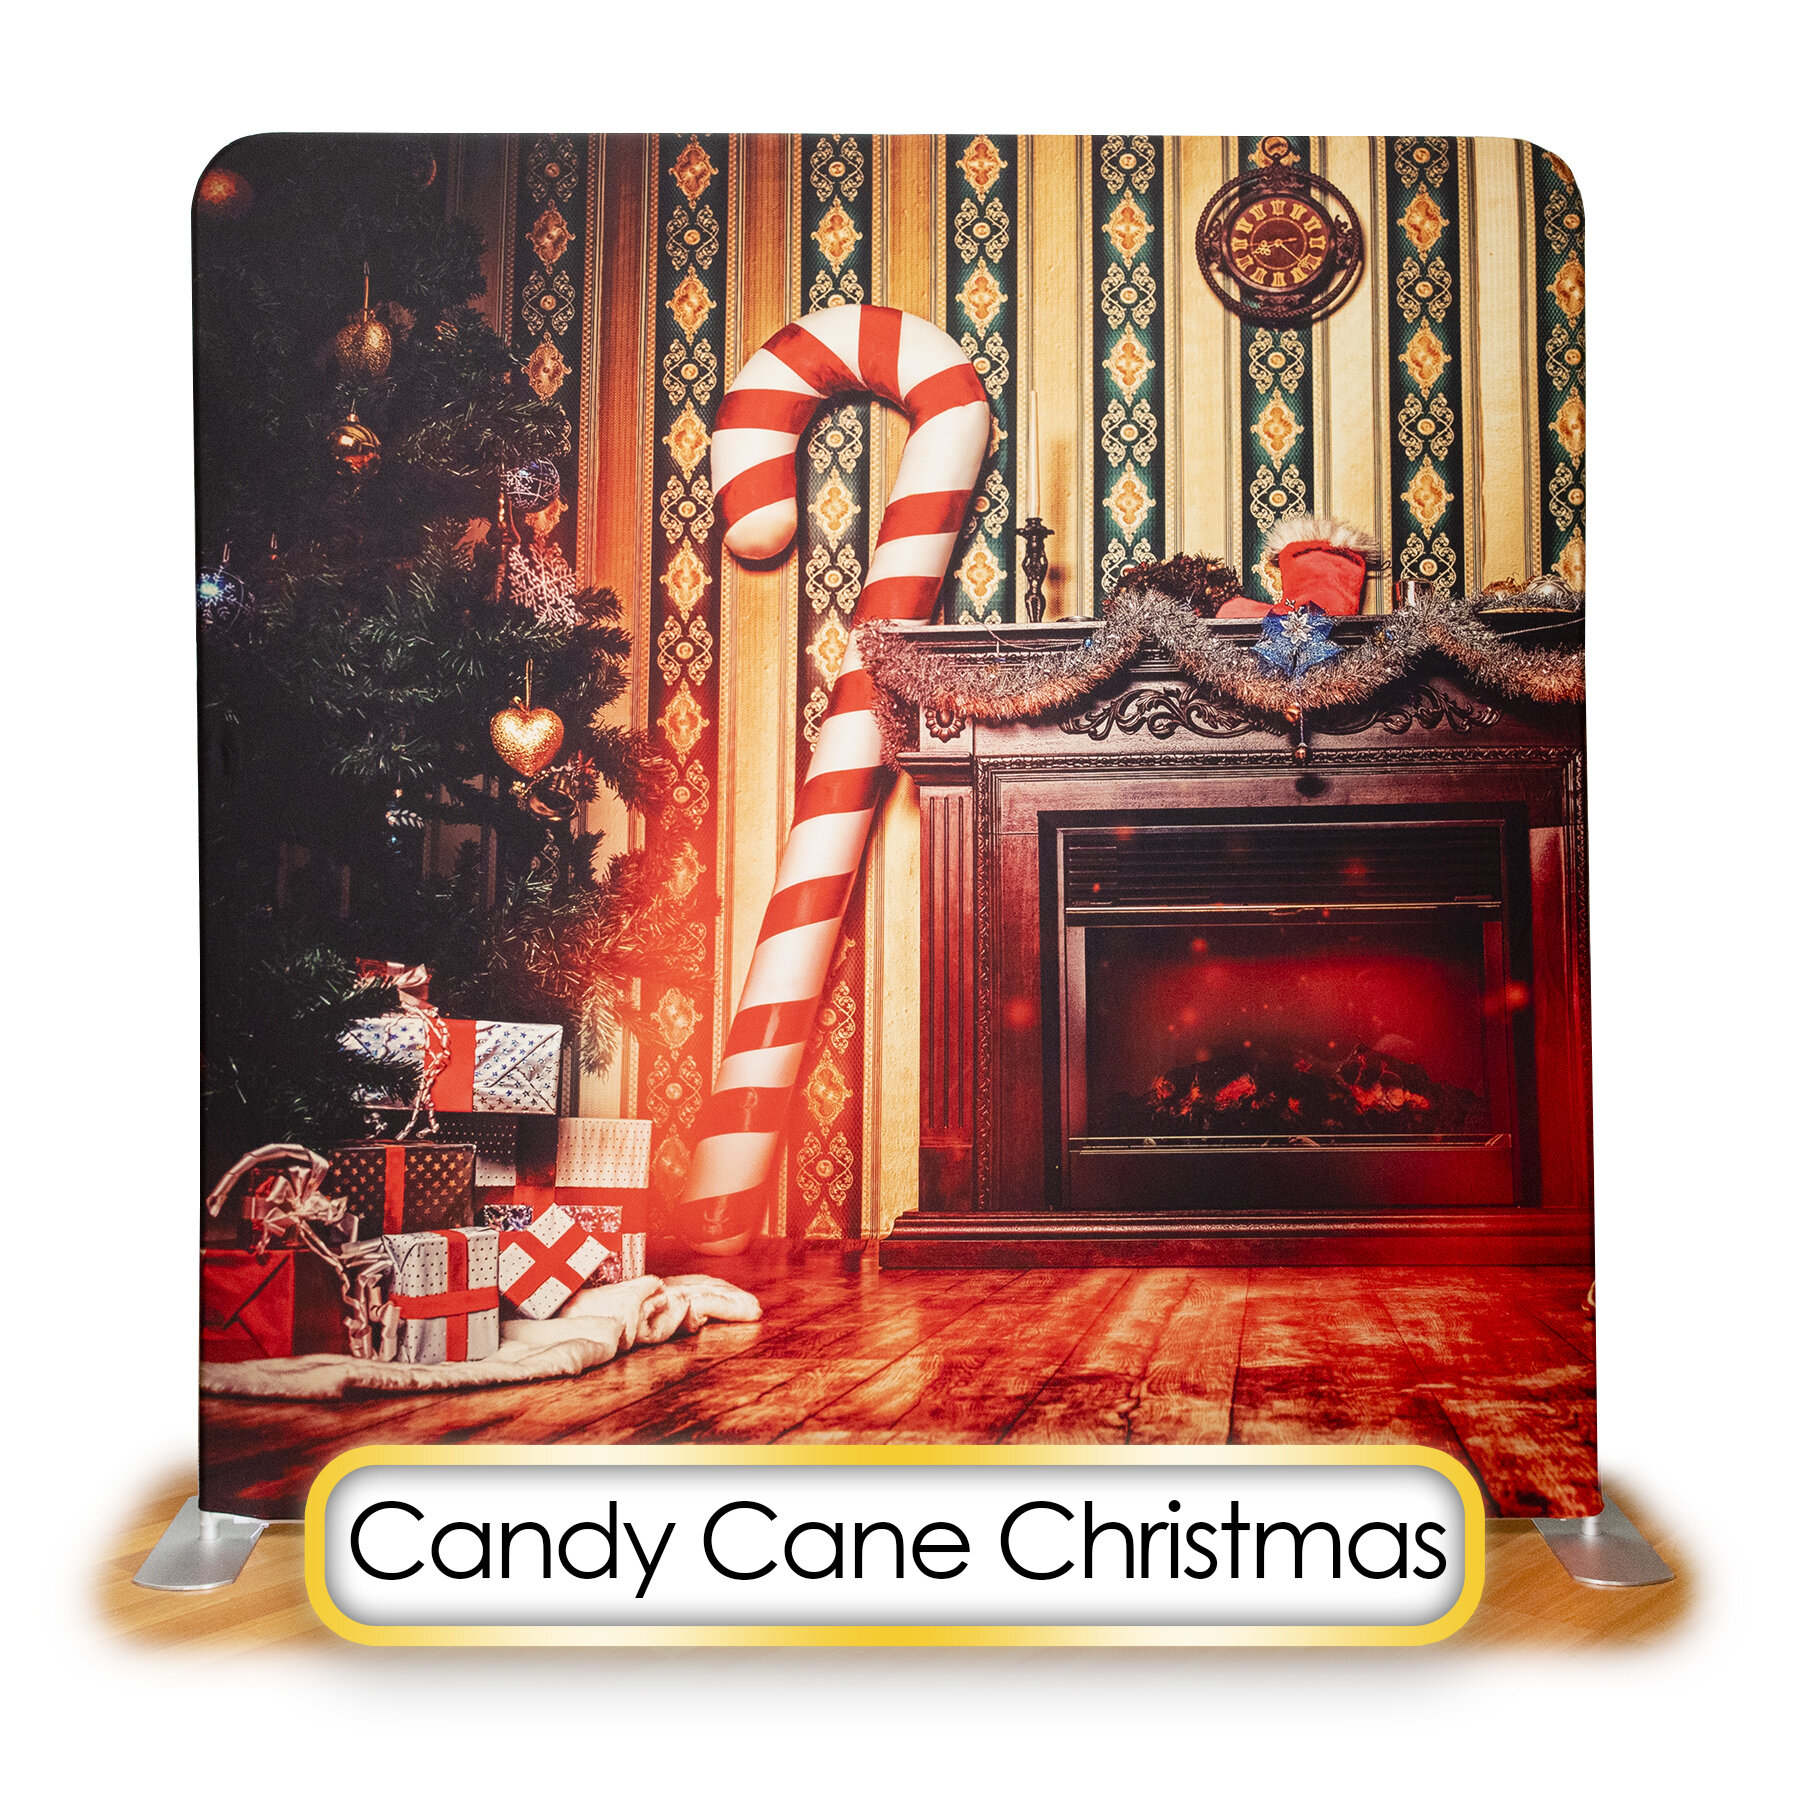 Candy Cane Christmas.jpg